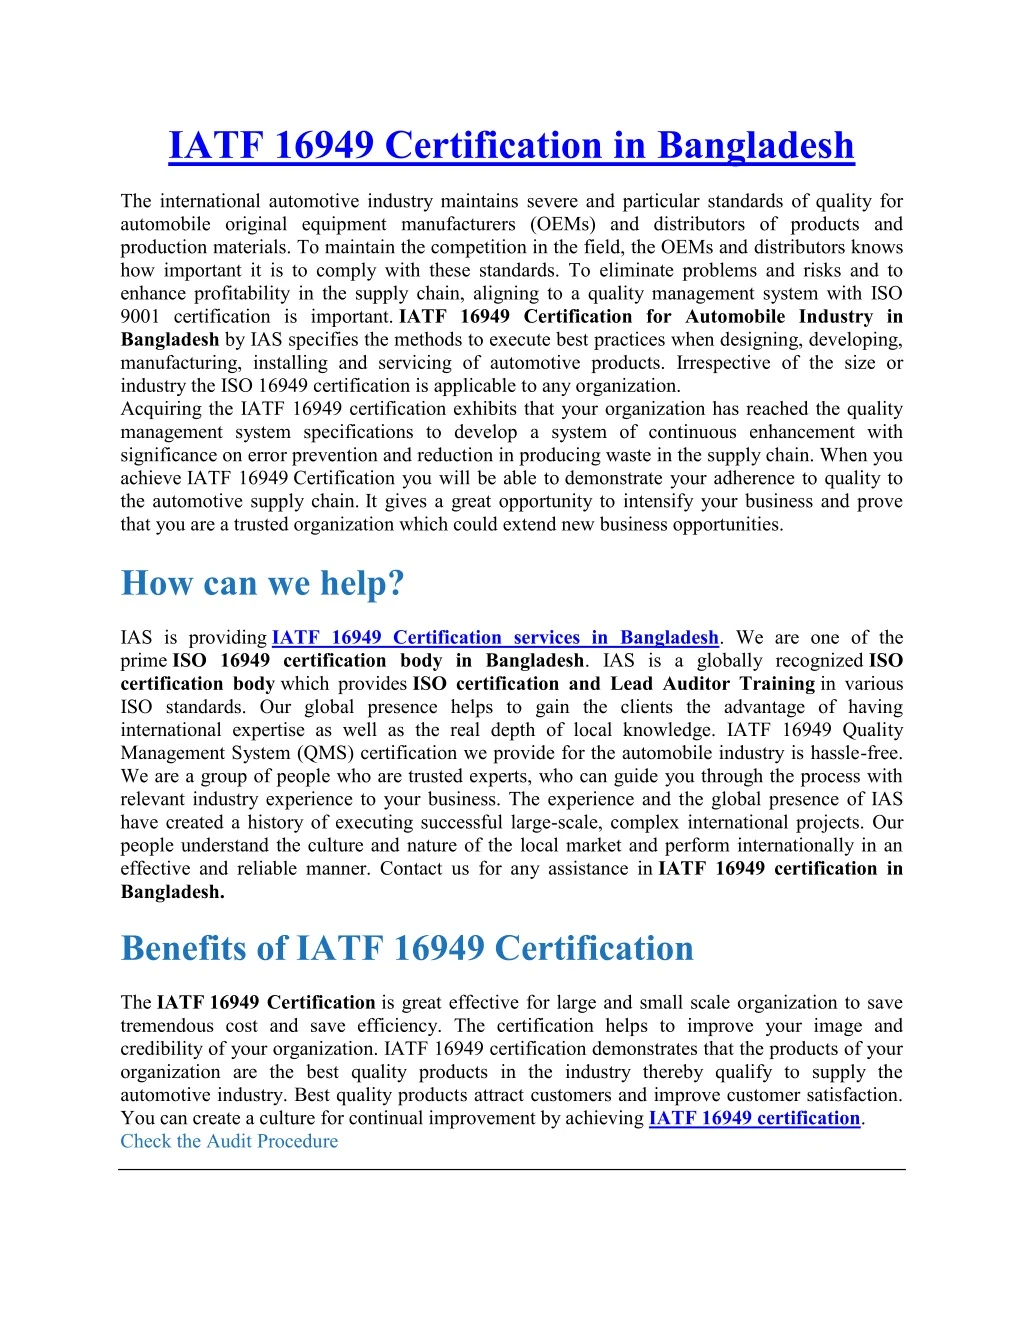 iatf 16949 certification in bangladesh